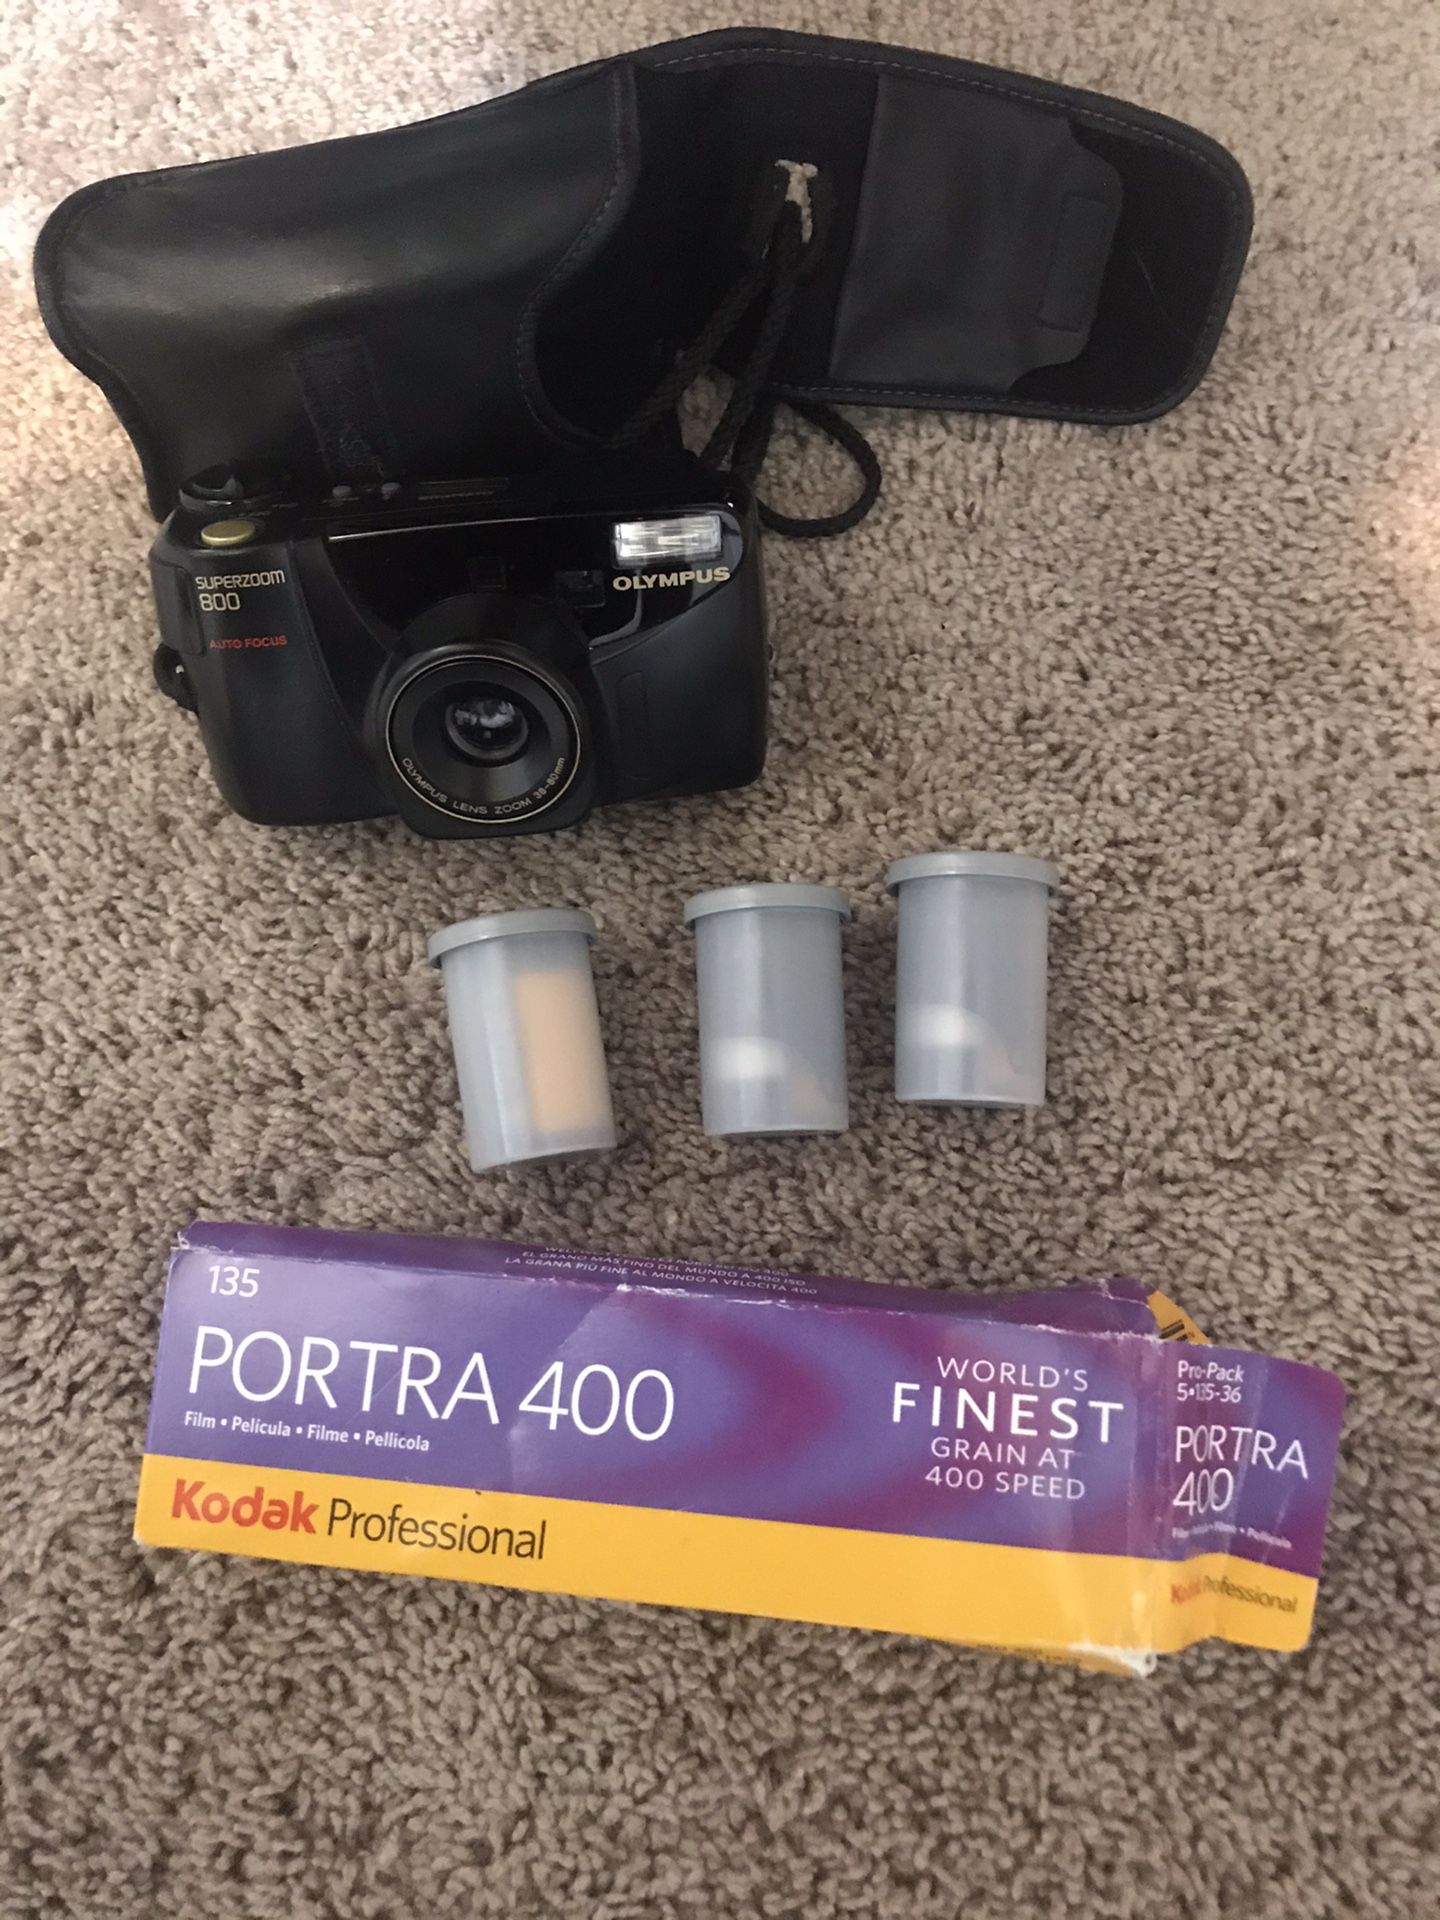 Film camera + professional PORTRA 400 film